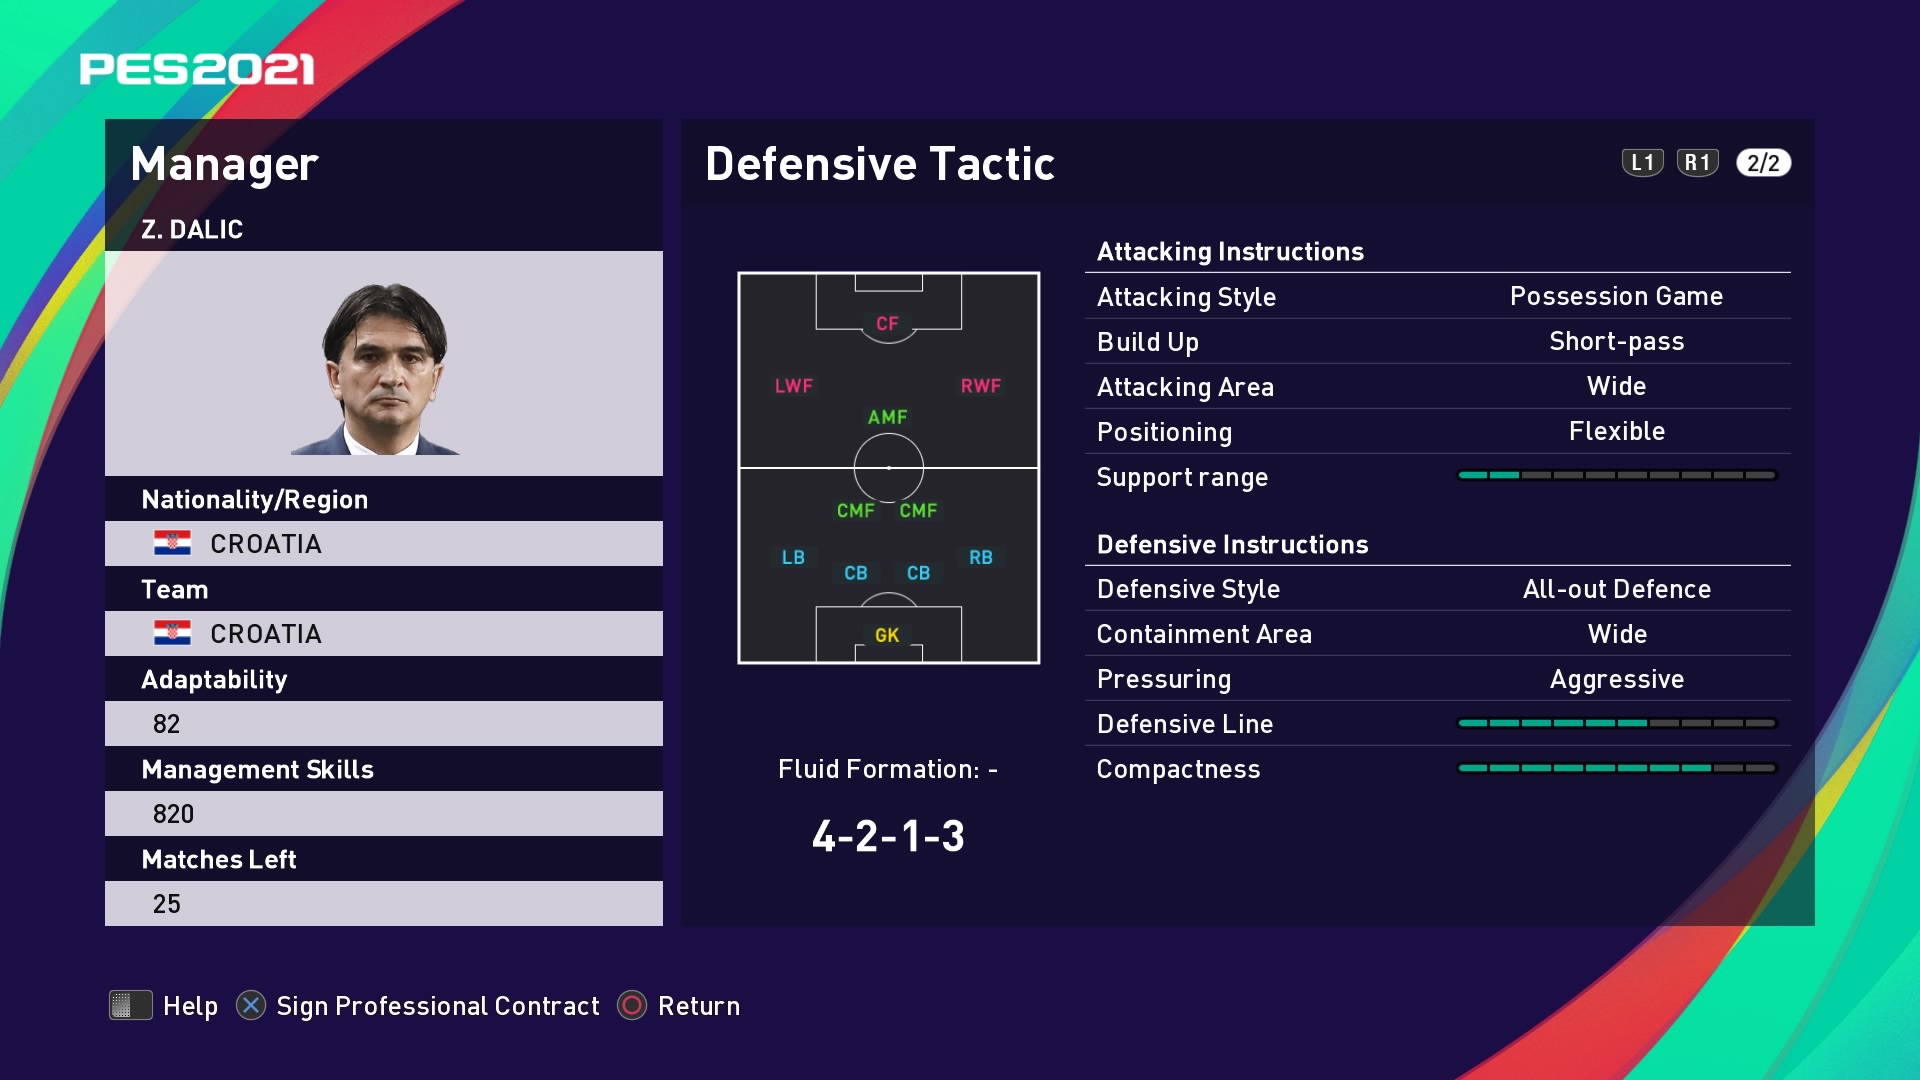 Z. Dalic (Zlatko Dalić) Defensive Tactic in PES 2021 myClub